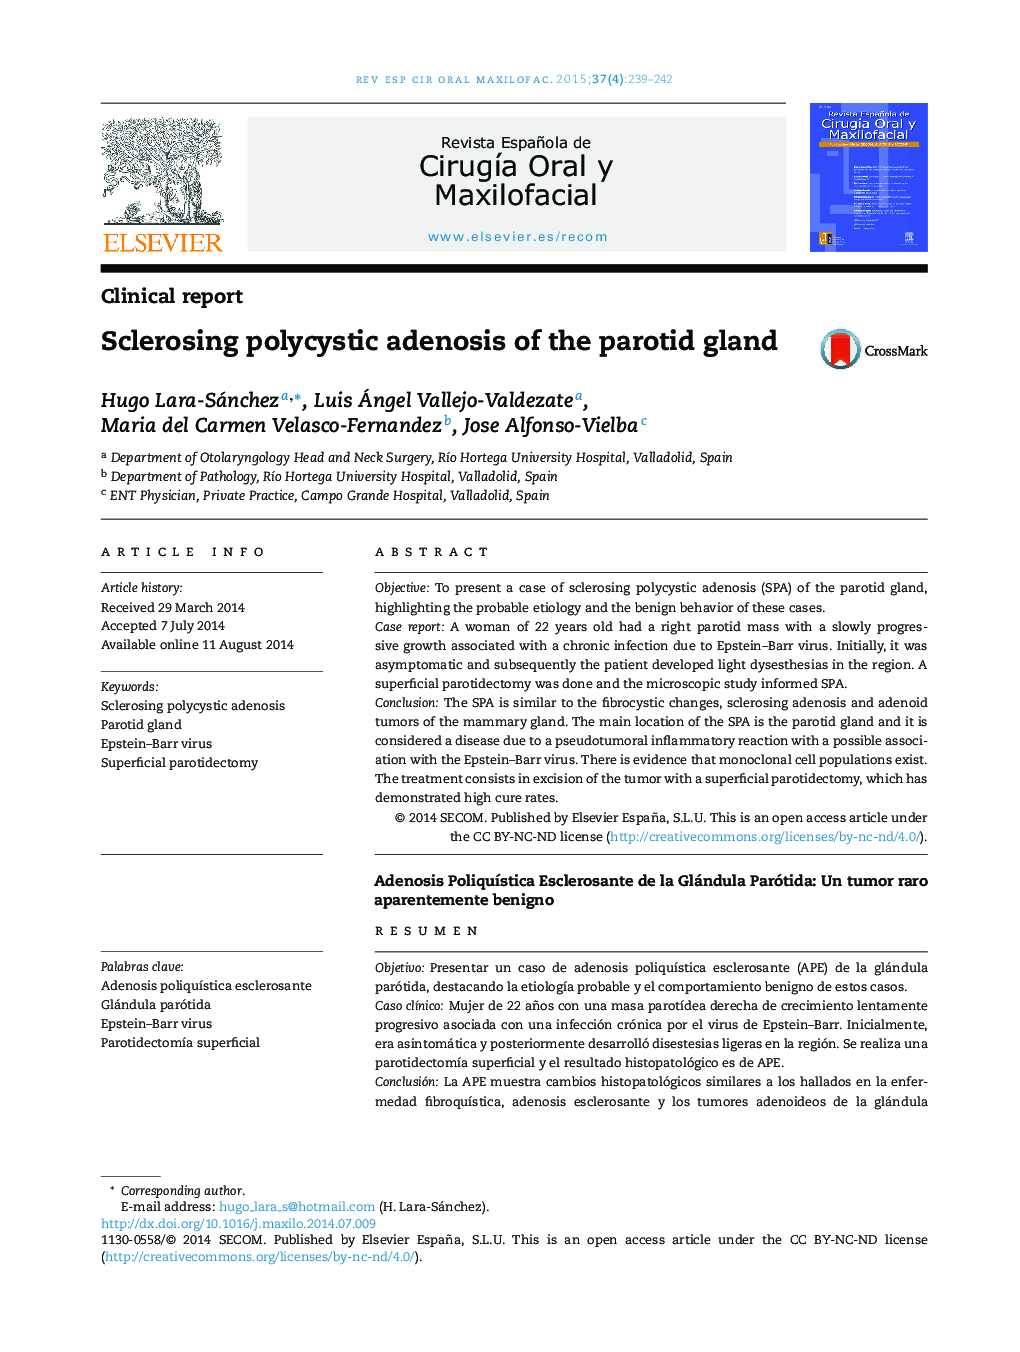 Sclerosing polycystic adenosis of the parotid gland